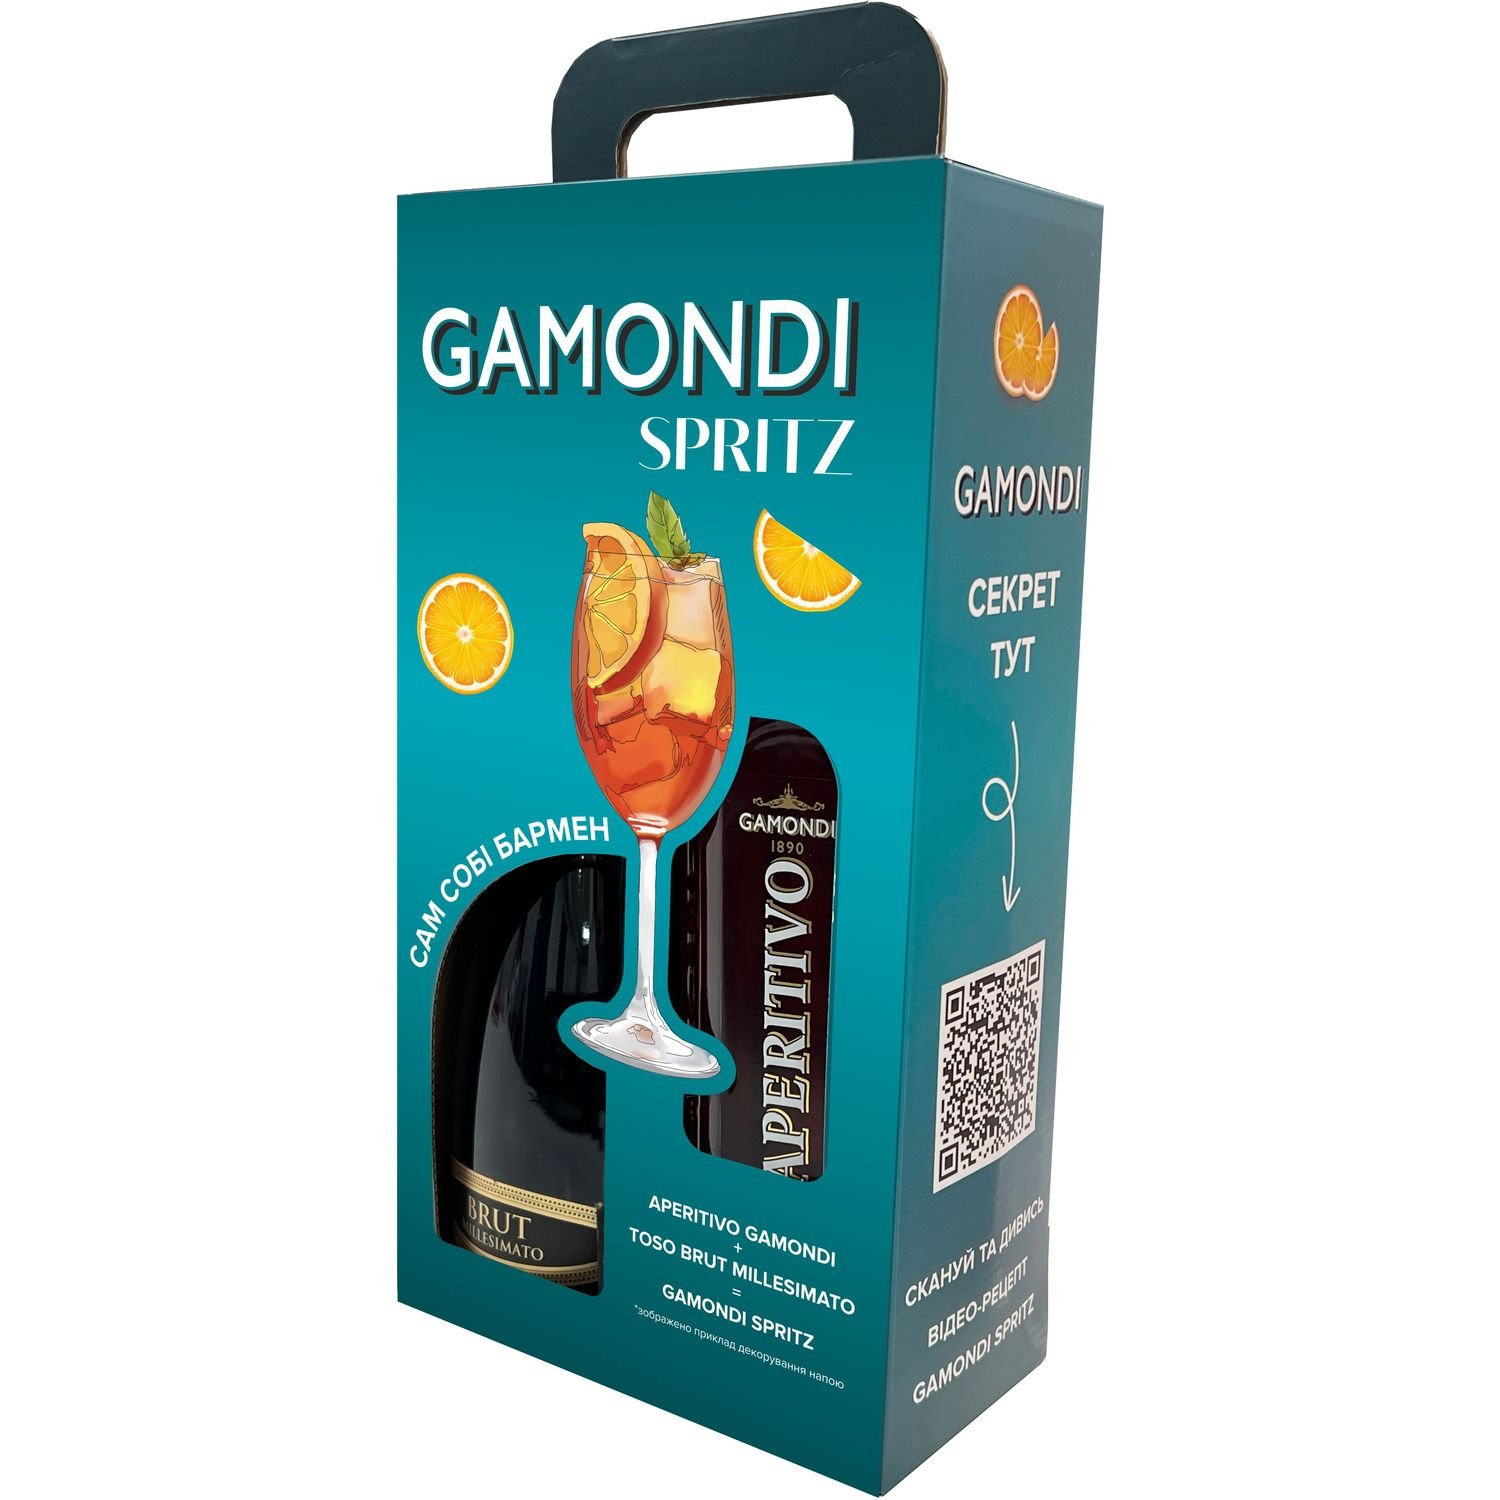 Набор Gamondi Spritz: Ликер Gamondi Aperitivo, 13,5%, 1 л + Игристое вино Toso Brut Millesimato, 0,75 л, в подарочной упаковке - фото 1